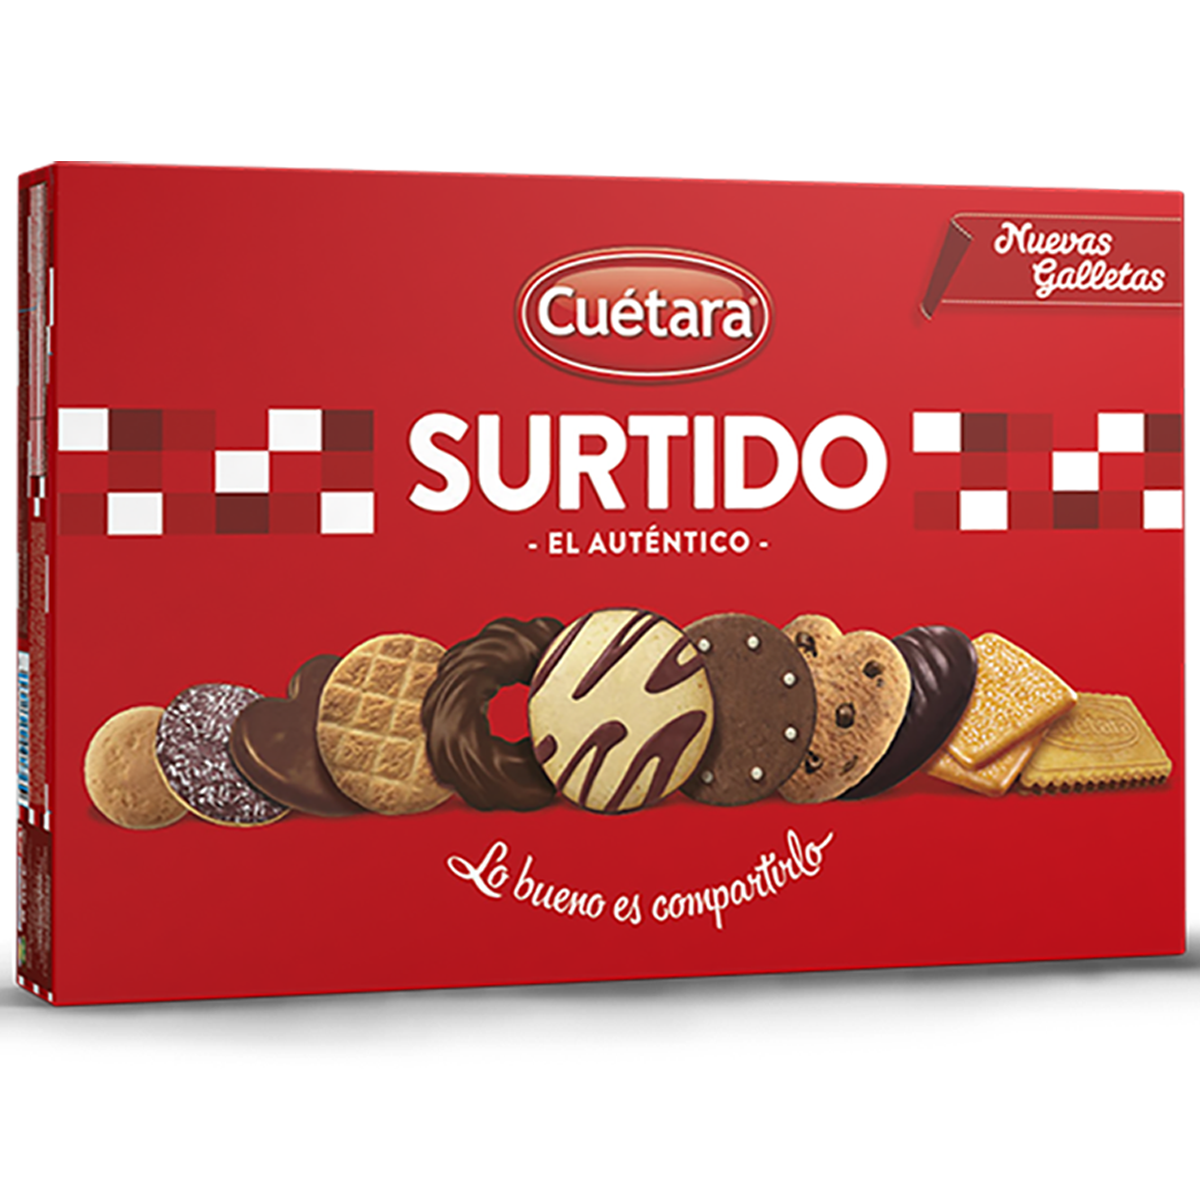 Cookies Choco Flakes Cuetara Callajeros - 250gr